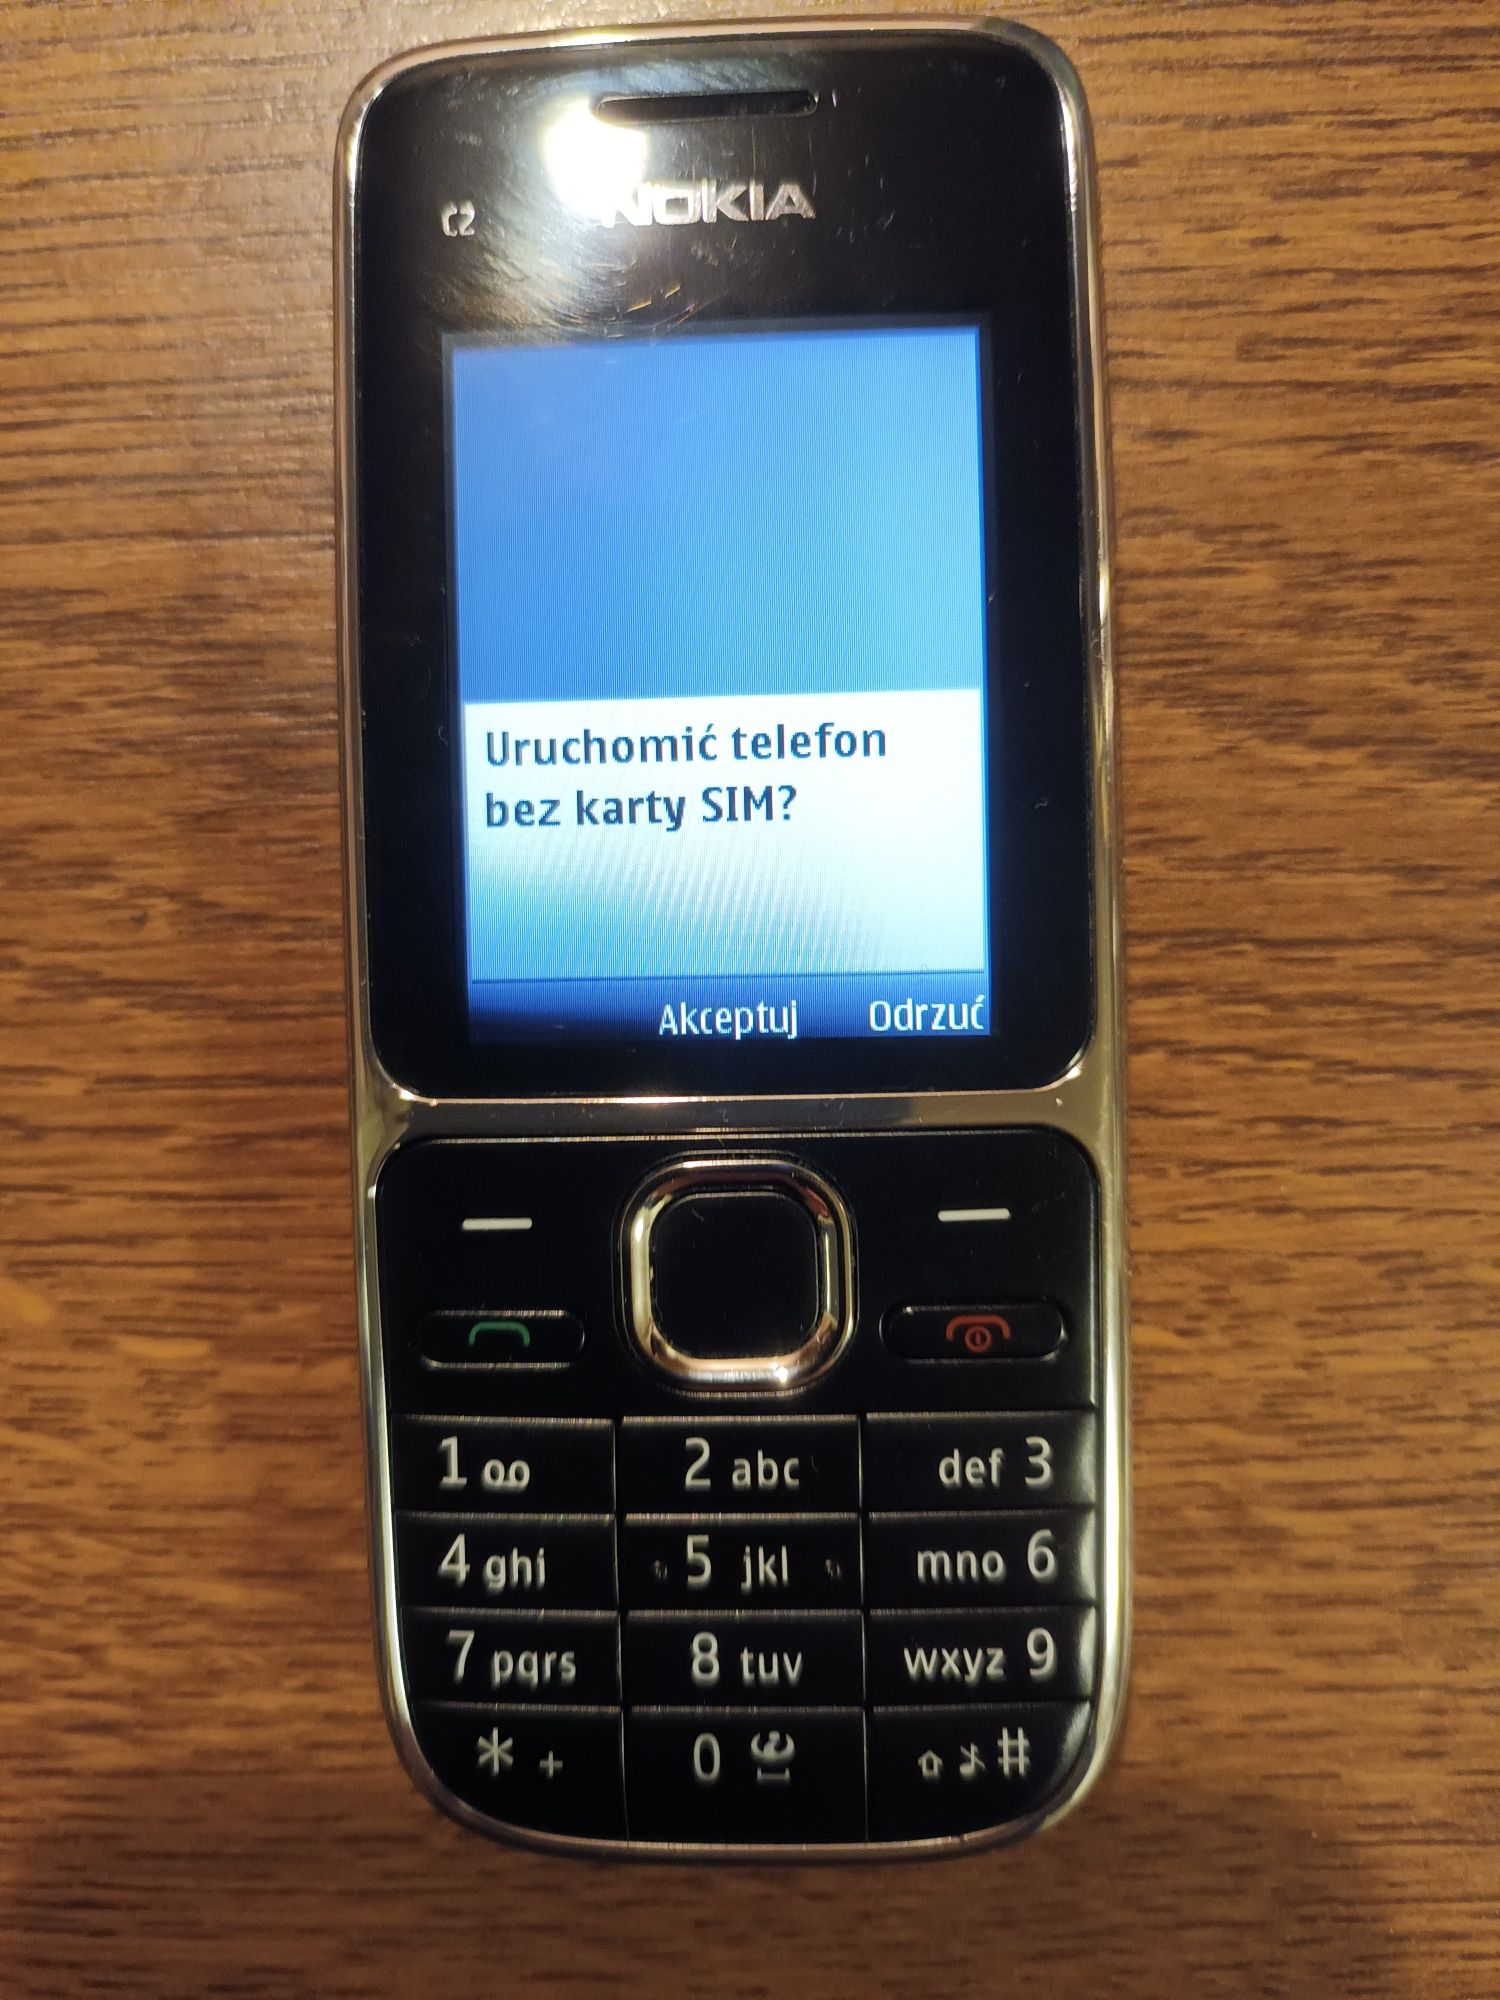 Nokia C2-01 czarny